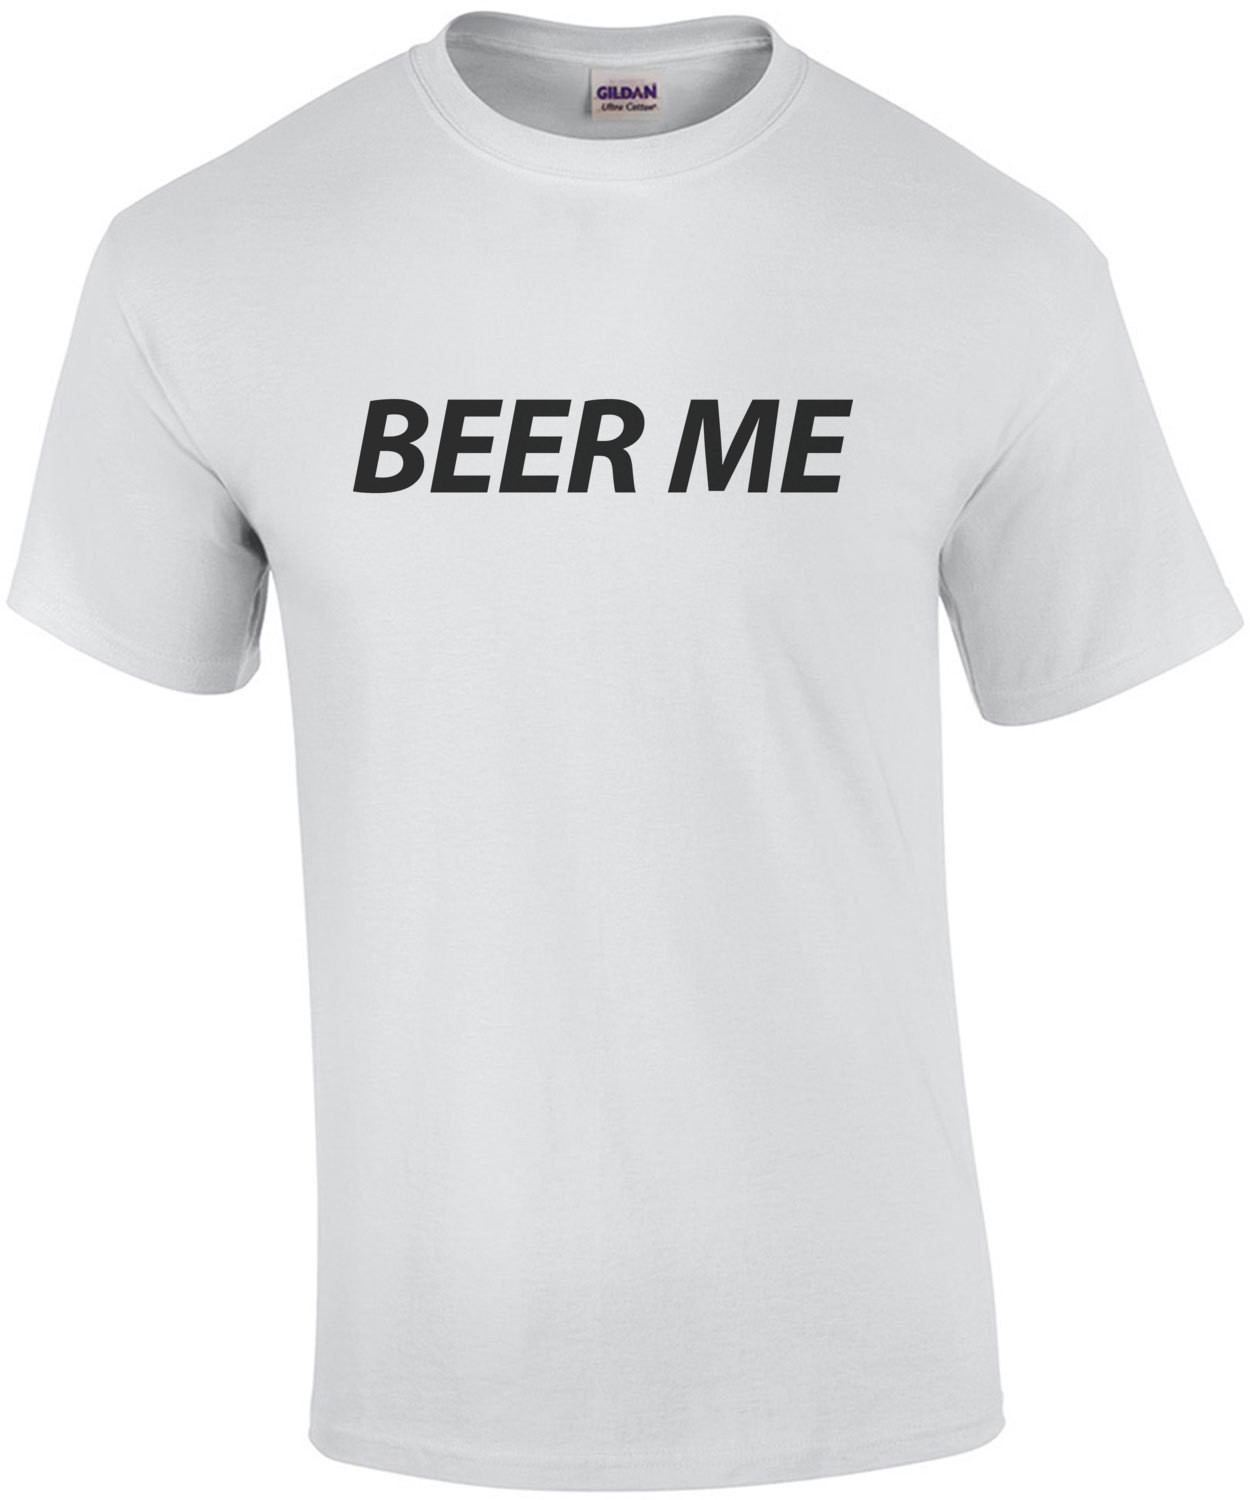 BEER ME - Funny Beer T-Shirt